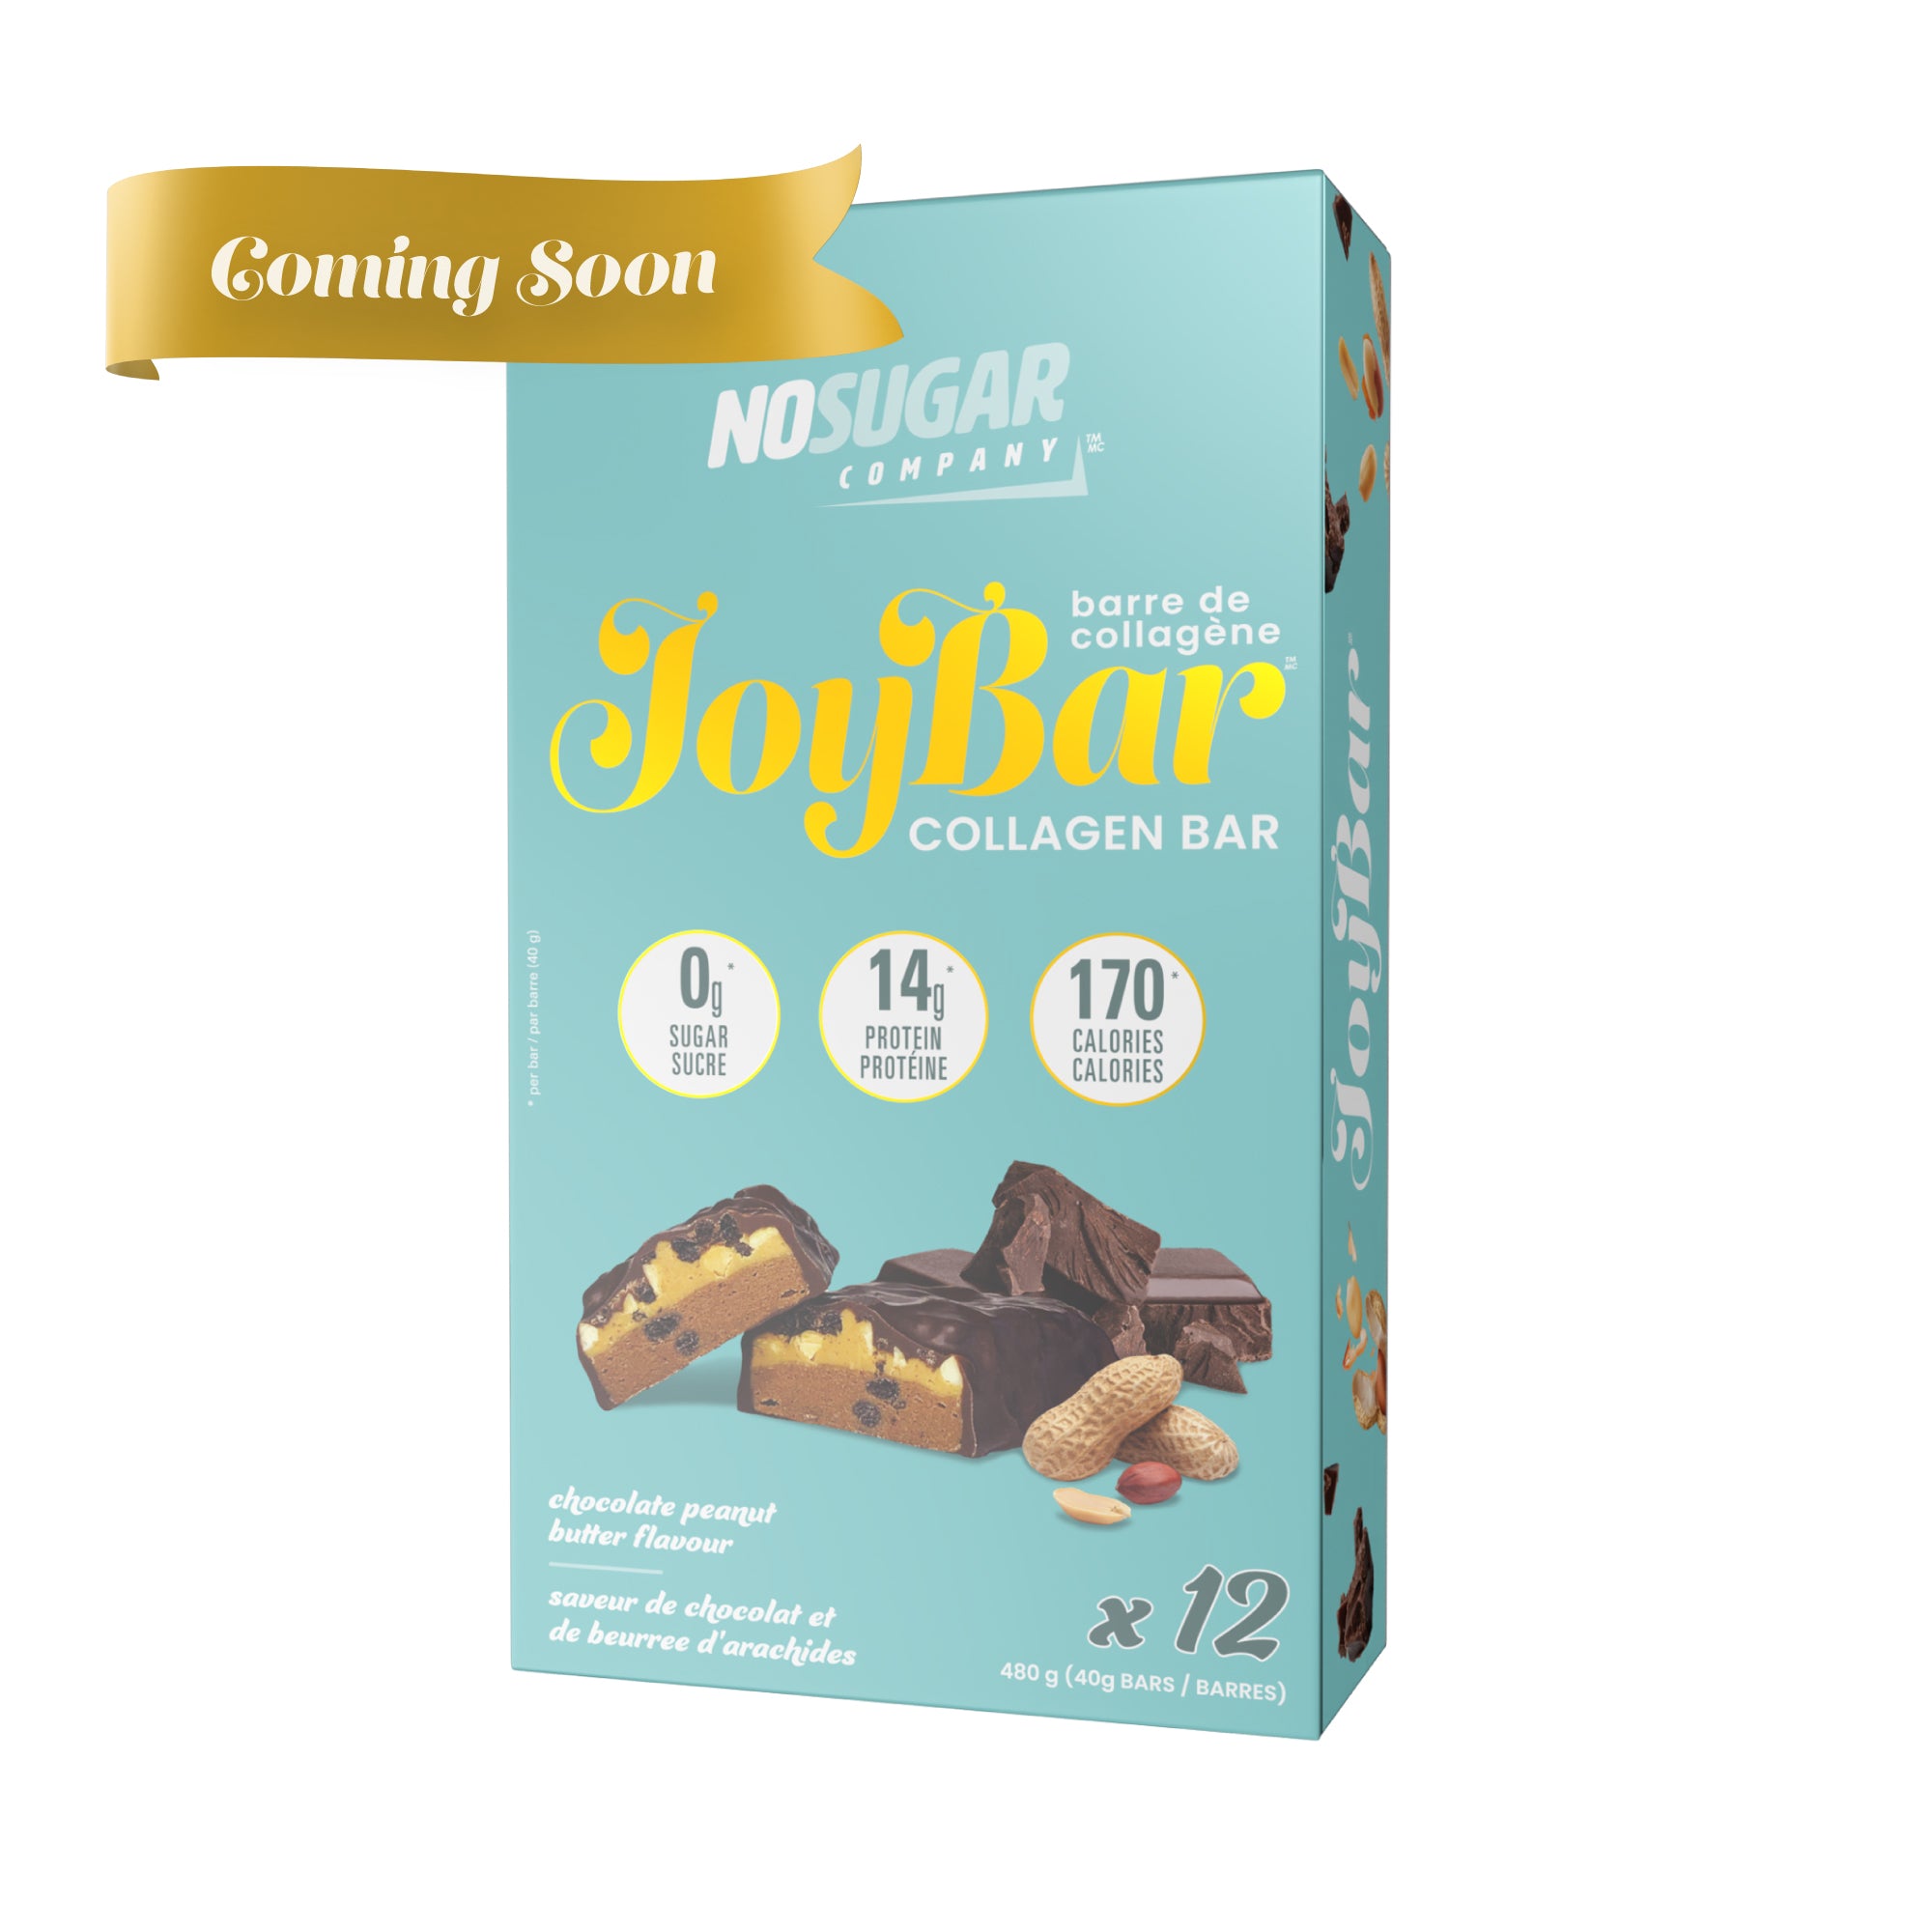 JOYBAR Collagen Bar - Chocolate Peanut Butter - 12 Bars, 40g (1.41oz) per Bar